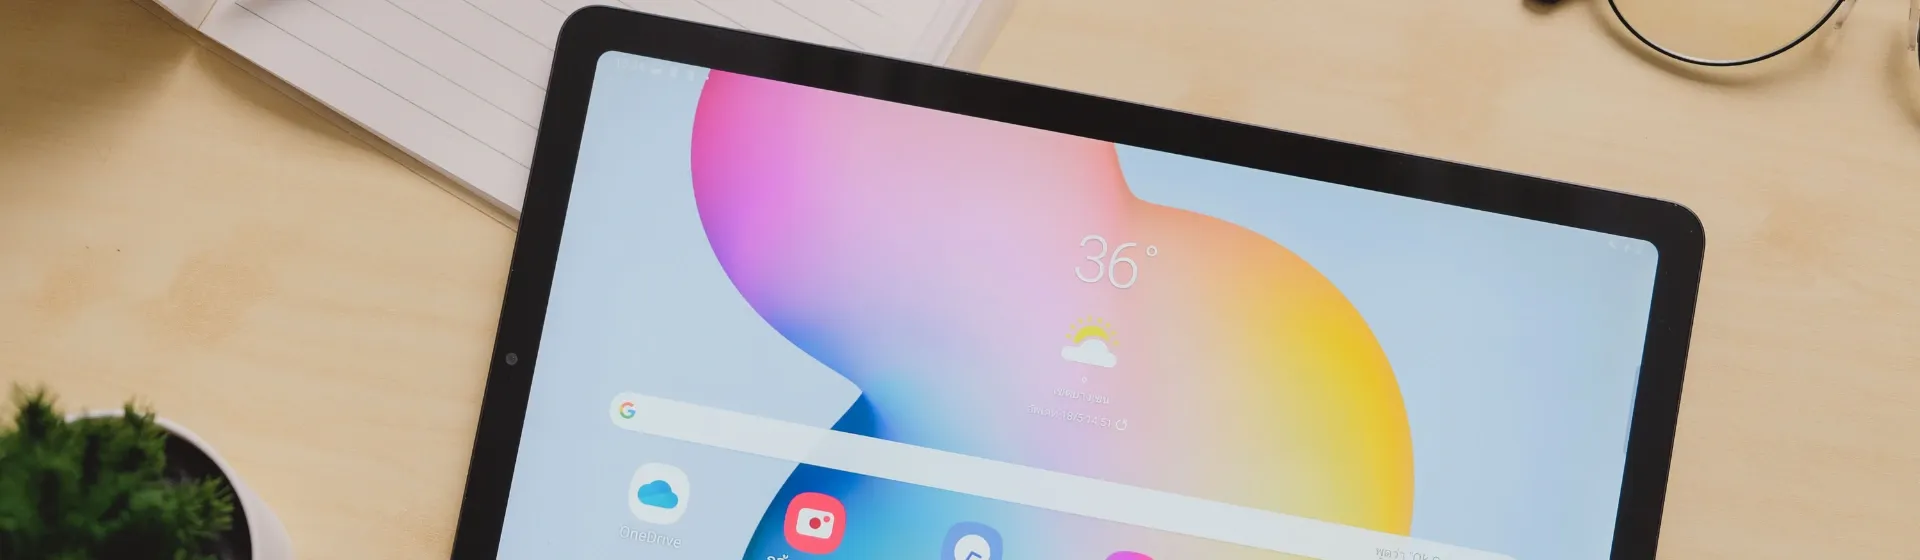 Como tirar print no tablet Samsung?